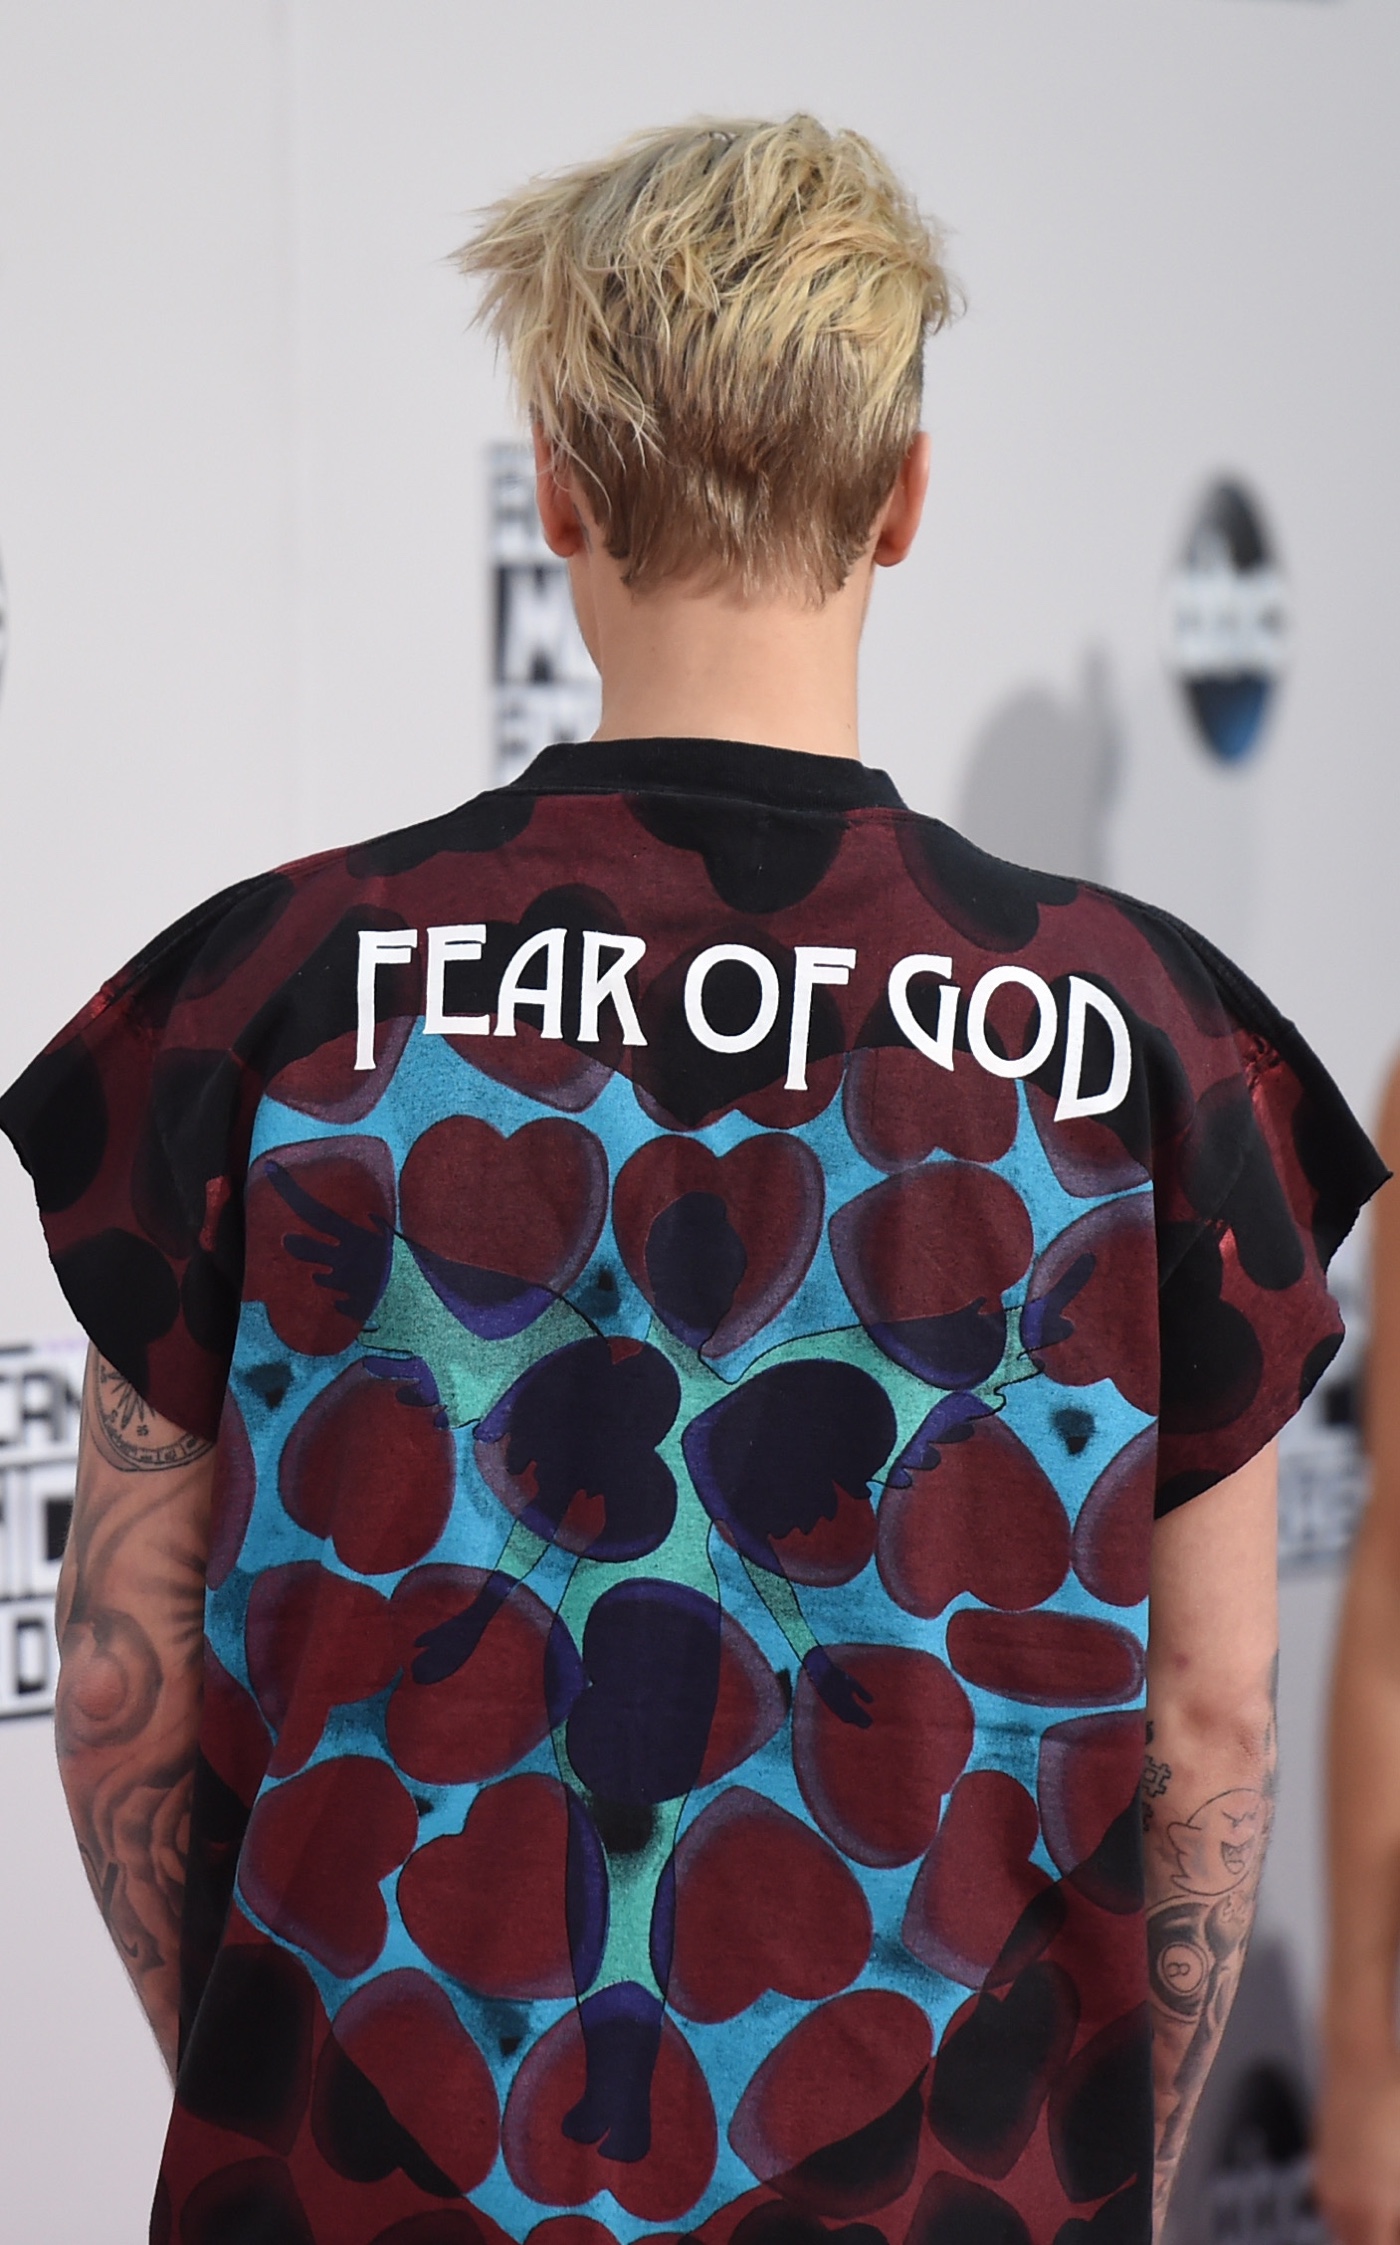 Image - American Music Awards 2015 red carpet Fear of God.jpg | Justin Bieber Wiki ...1400 x 2245